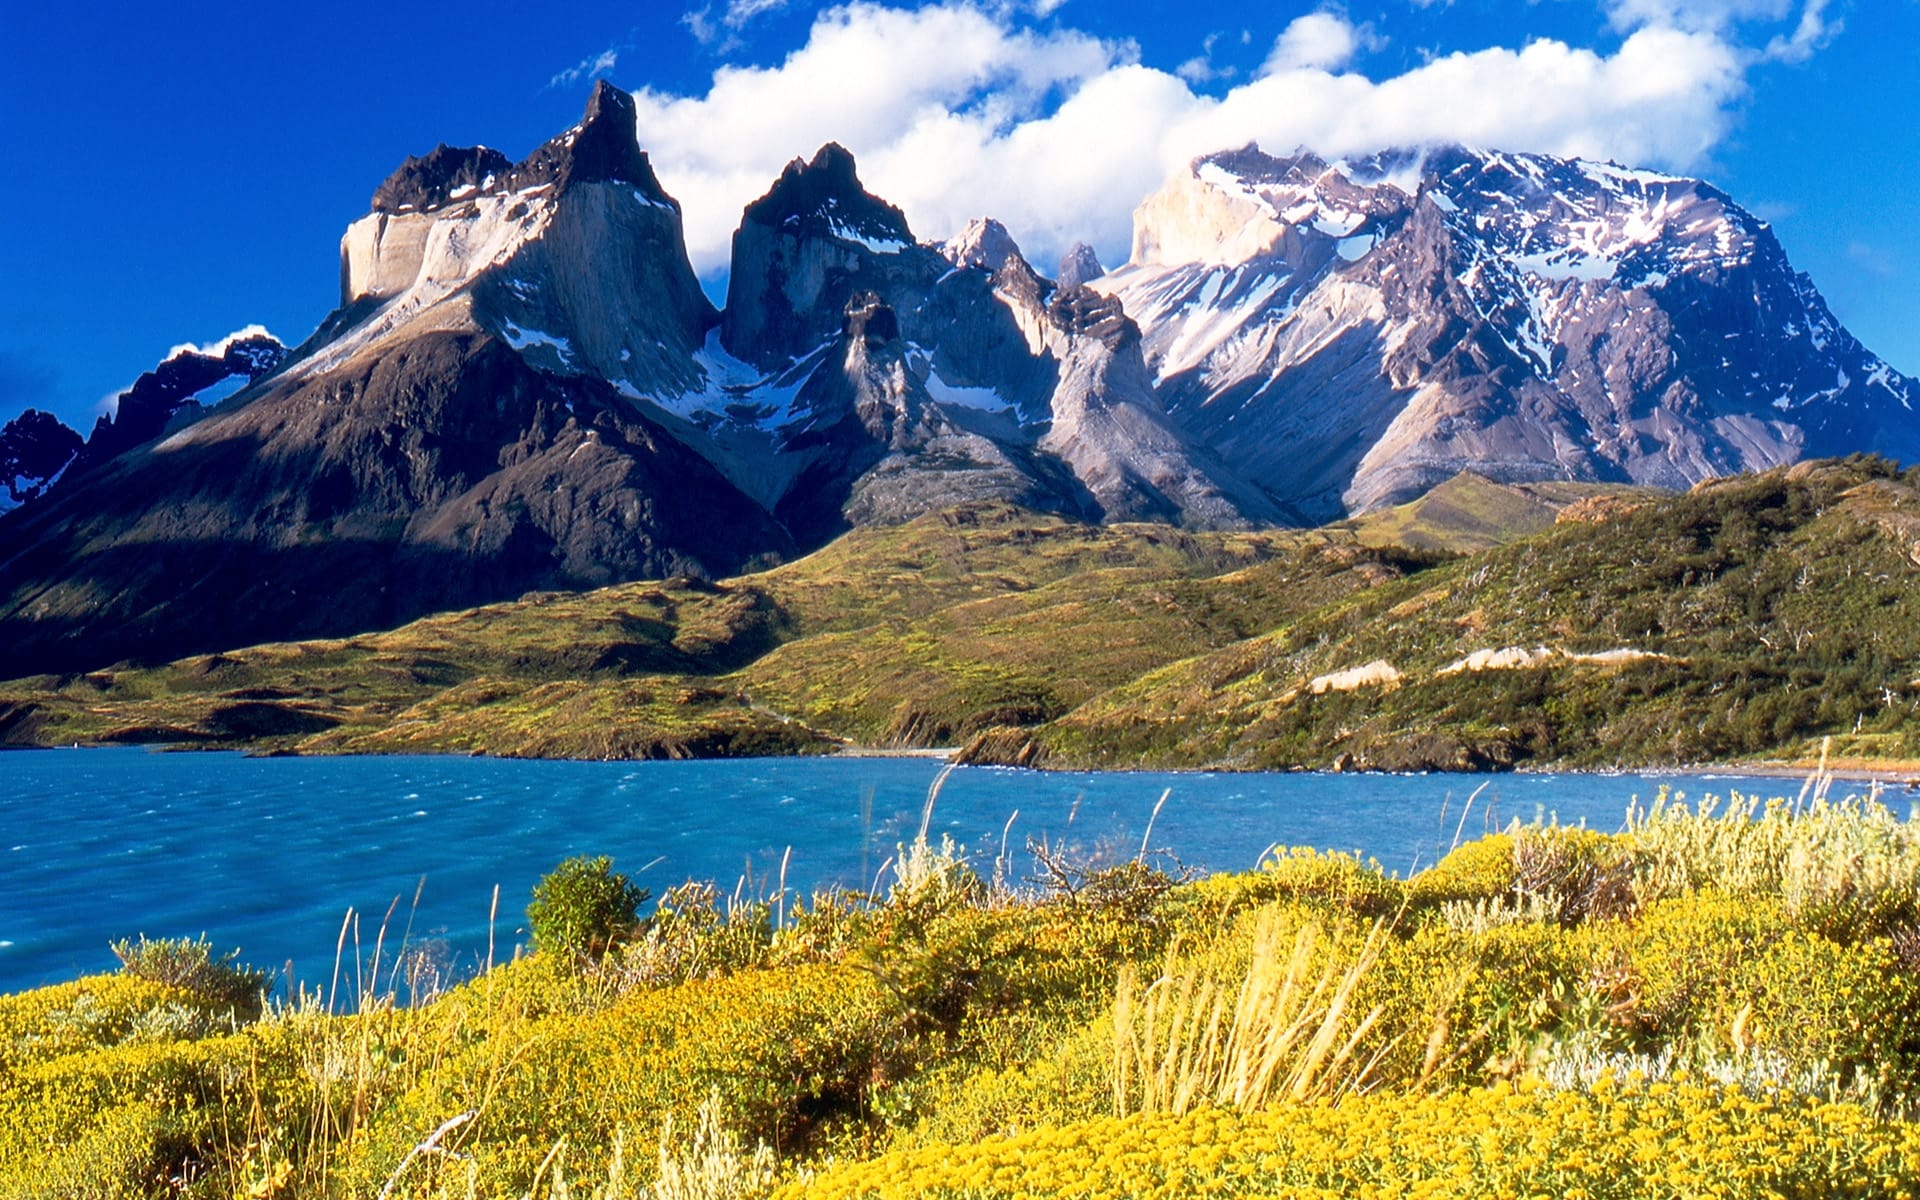 Chile Patagonia